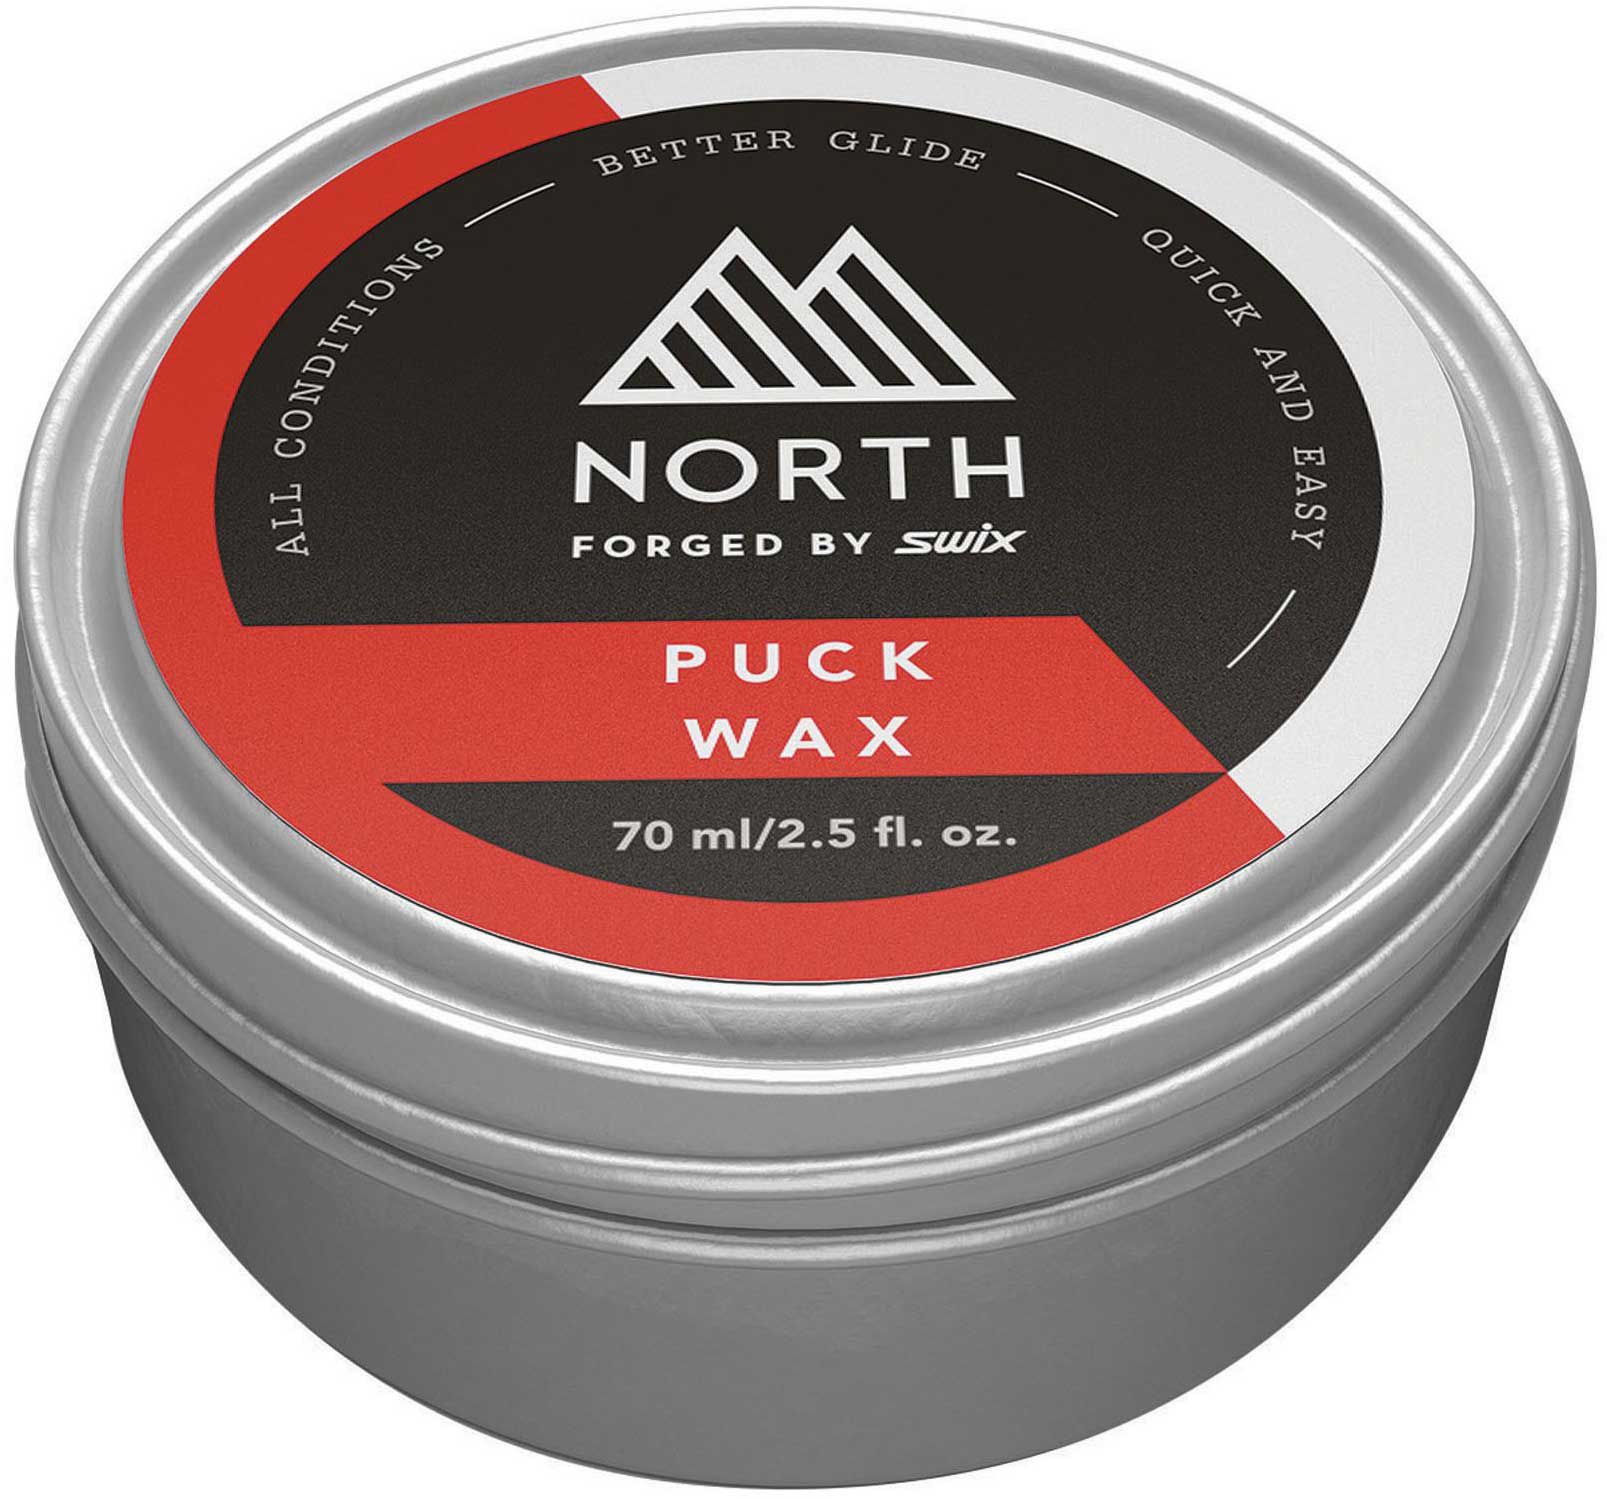 North Swix Puck Wax.jpg